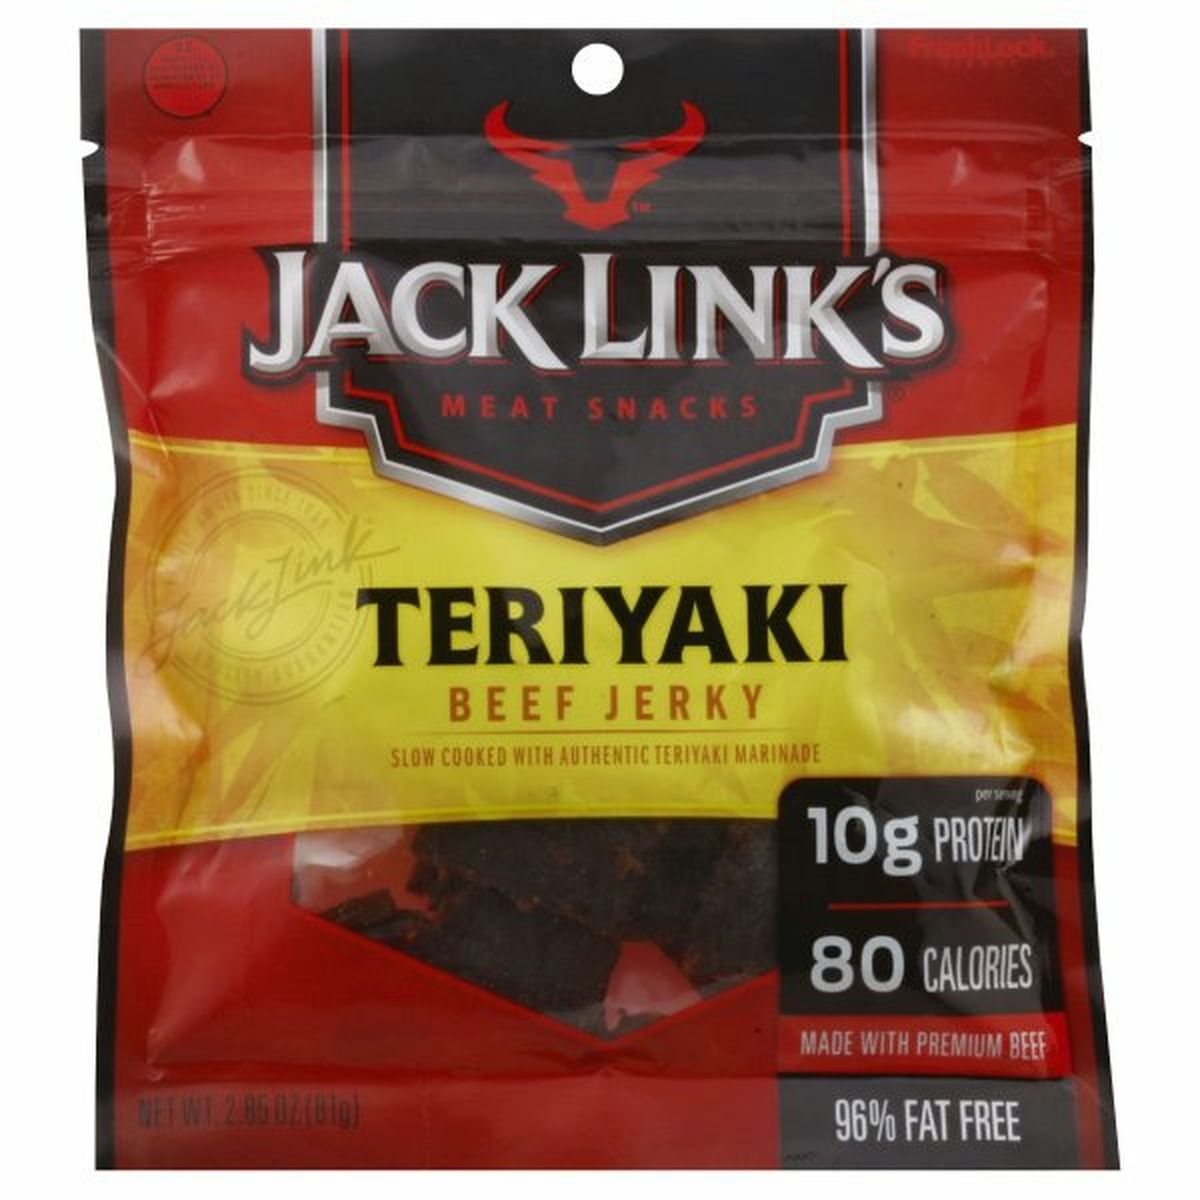 Calories in Jack Link's Beef Jerky, Teriyaki